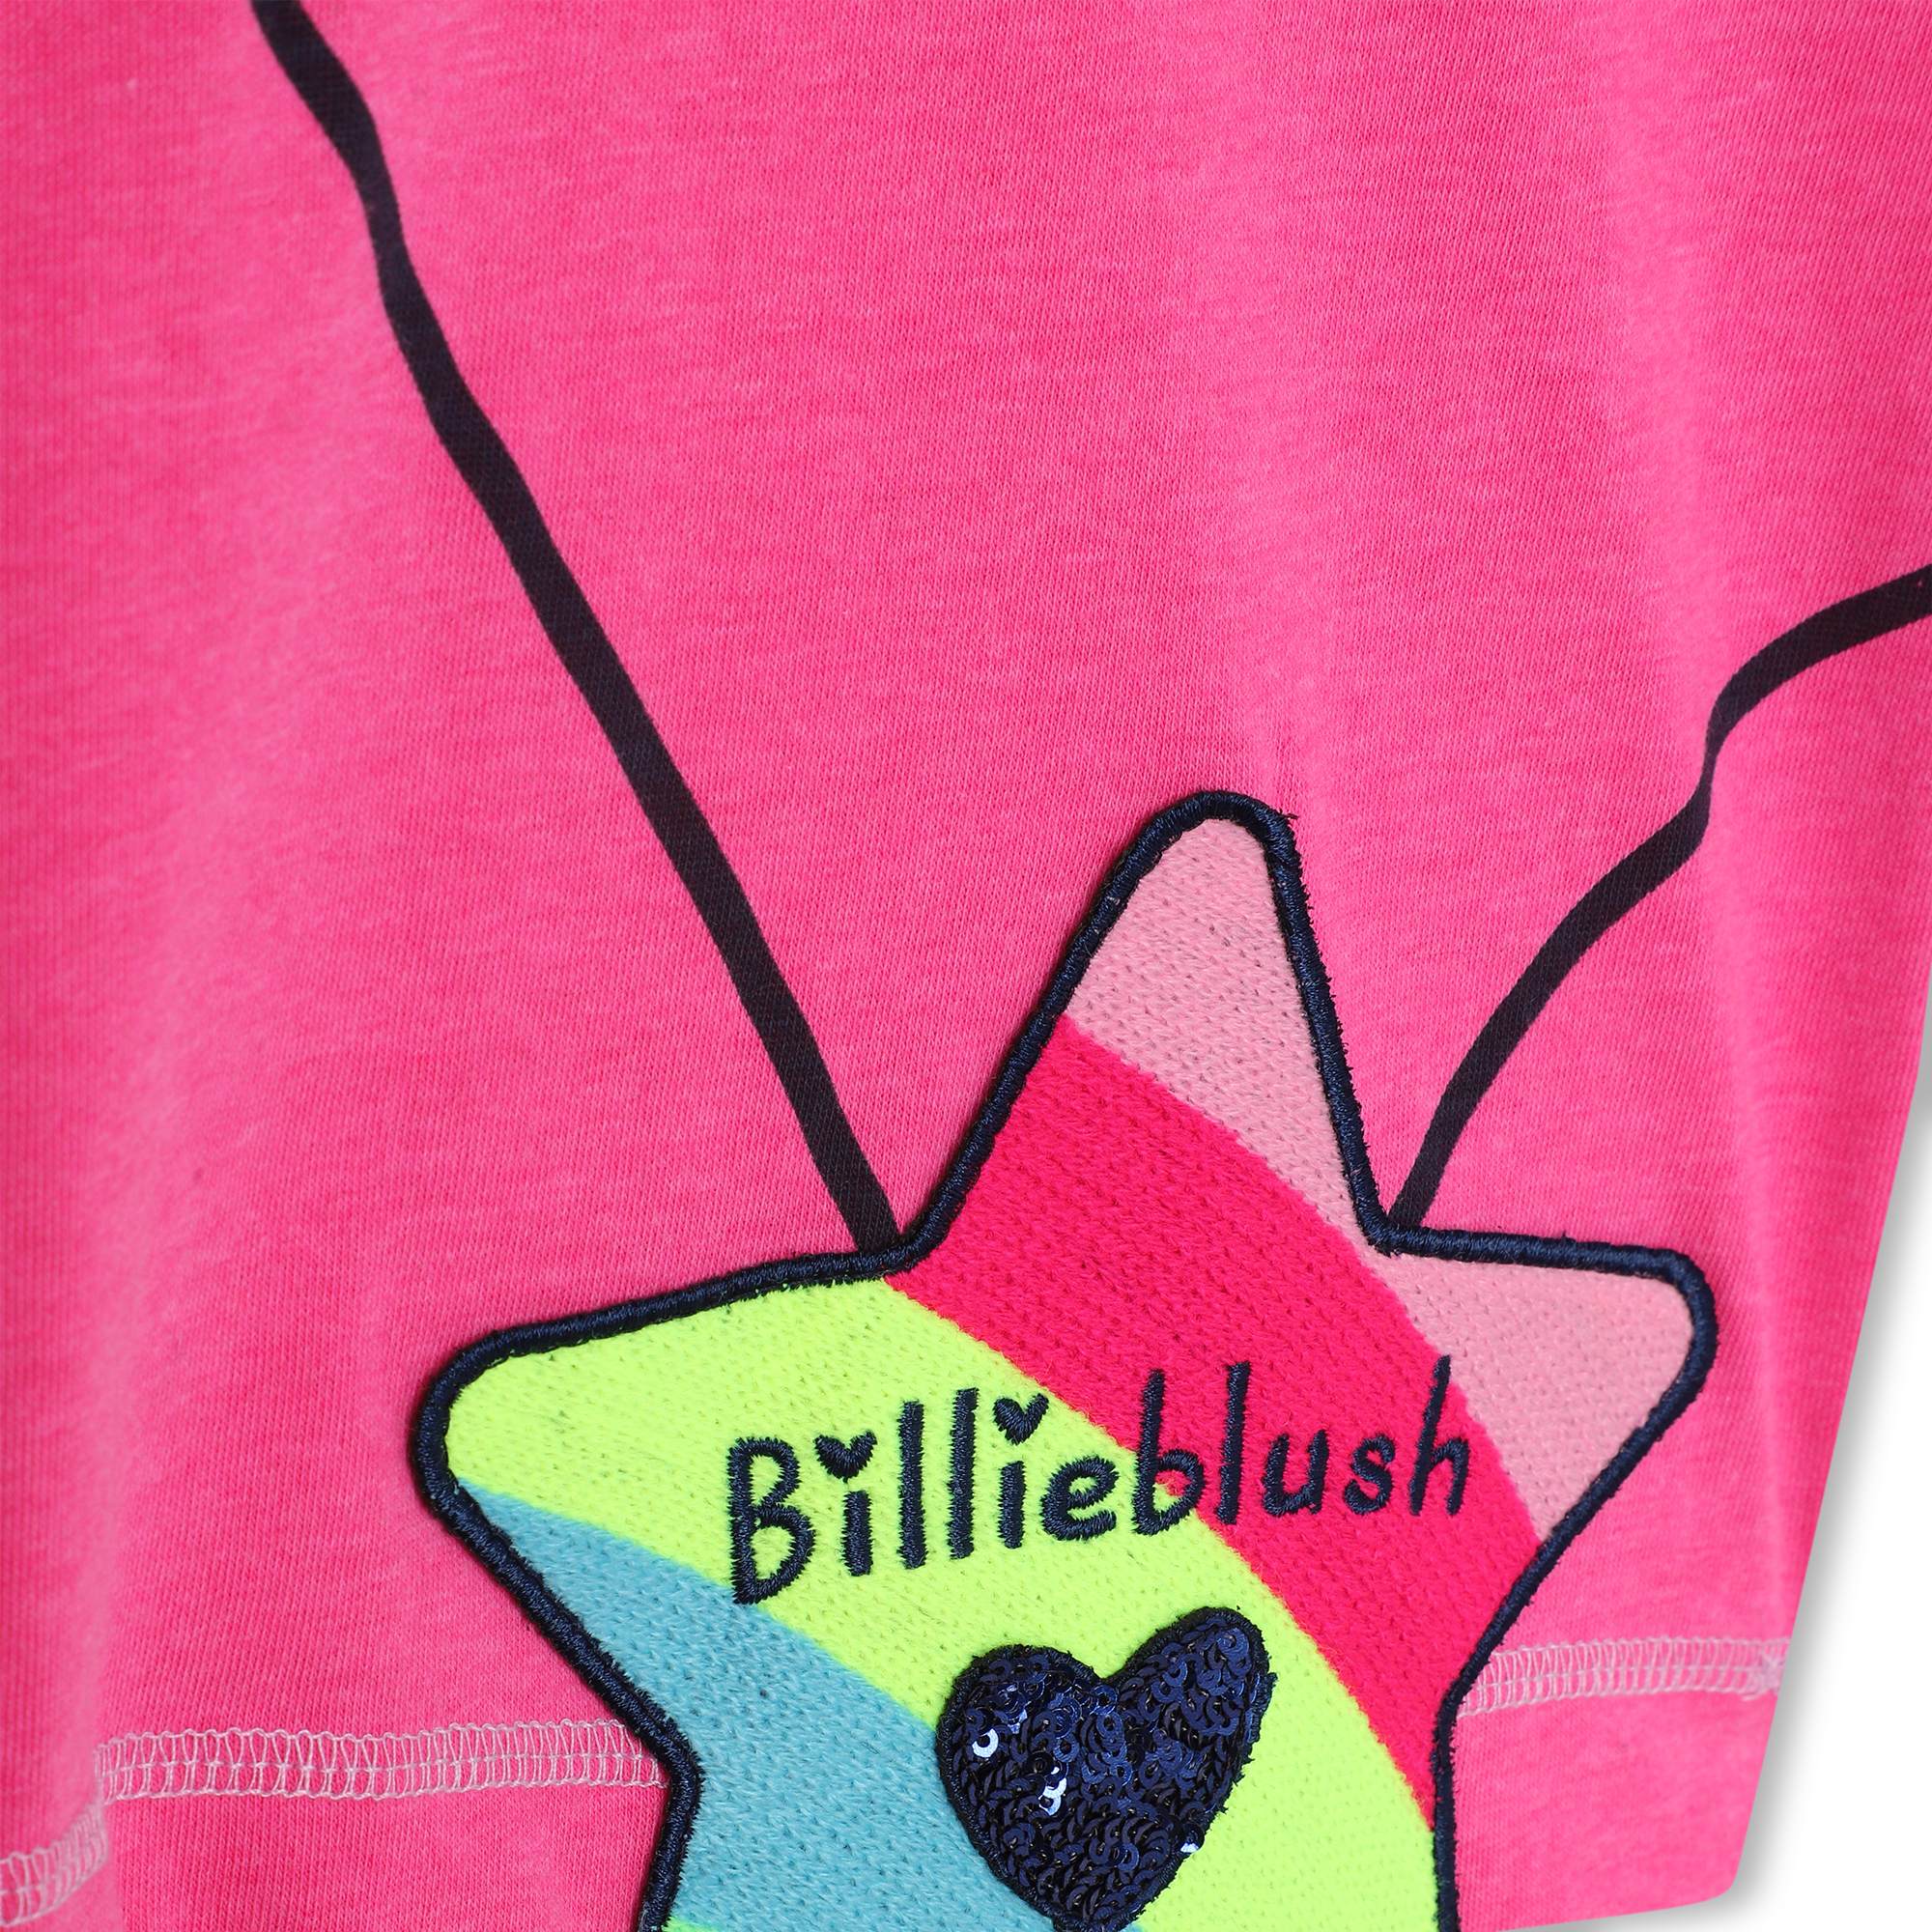 Billieblush Neon Pink Top